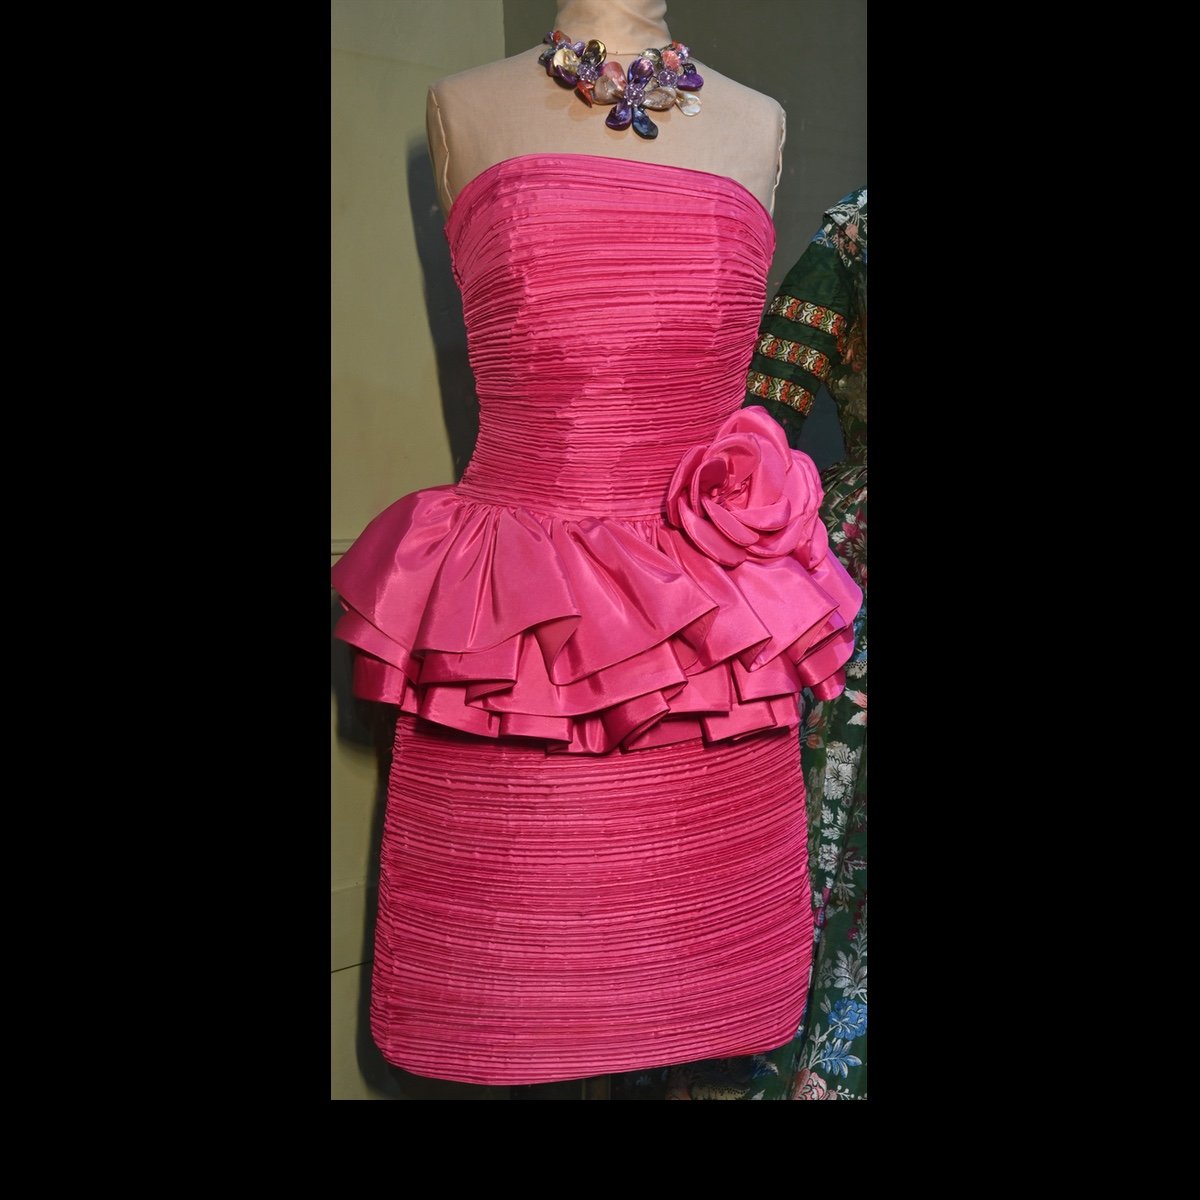 c.1985 Pink polyester dress